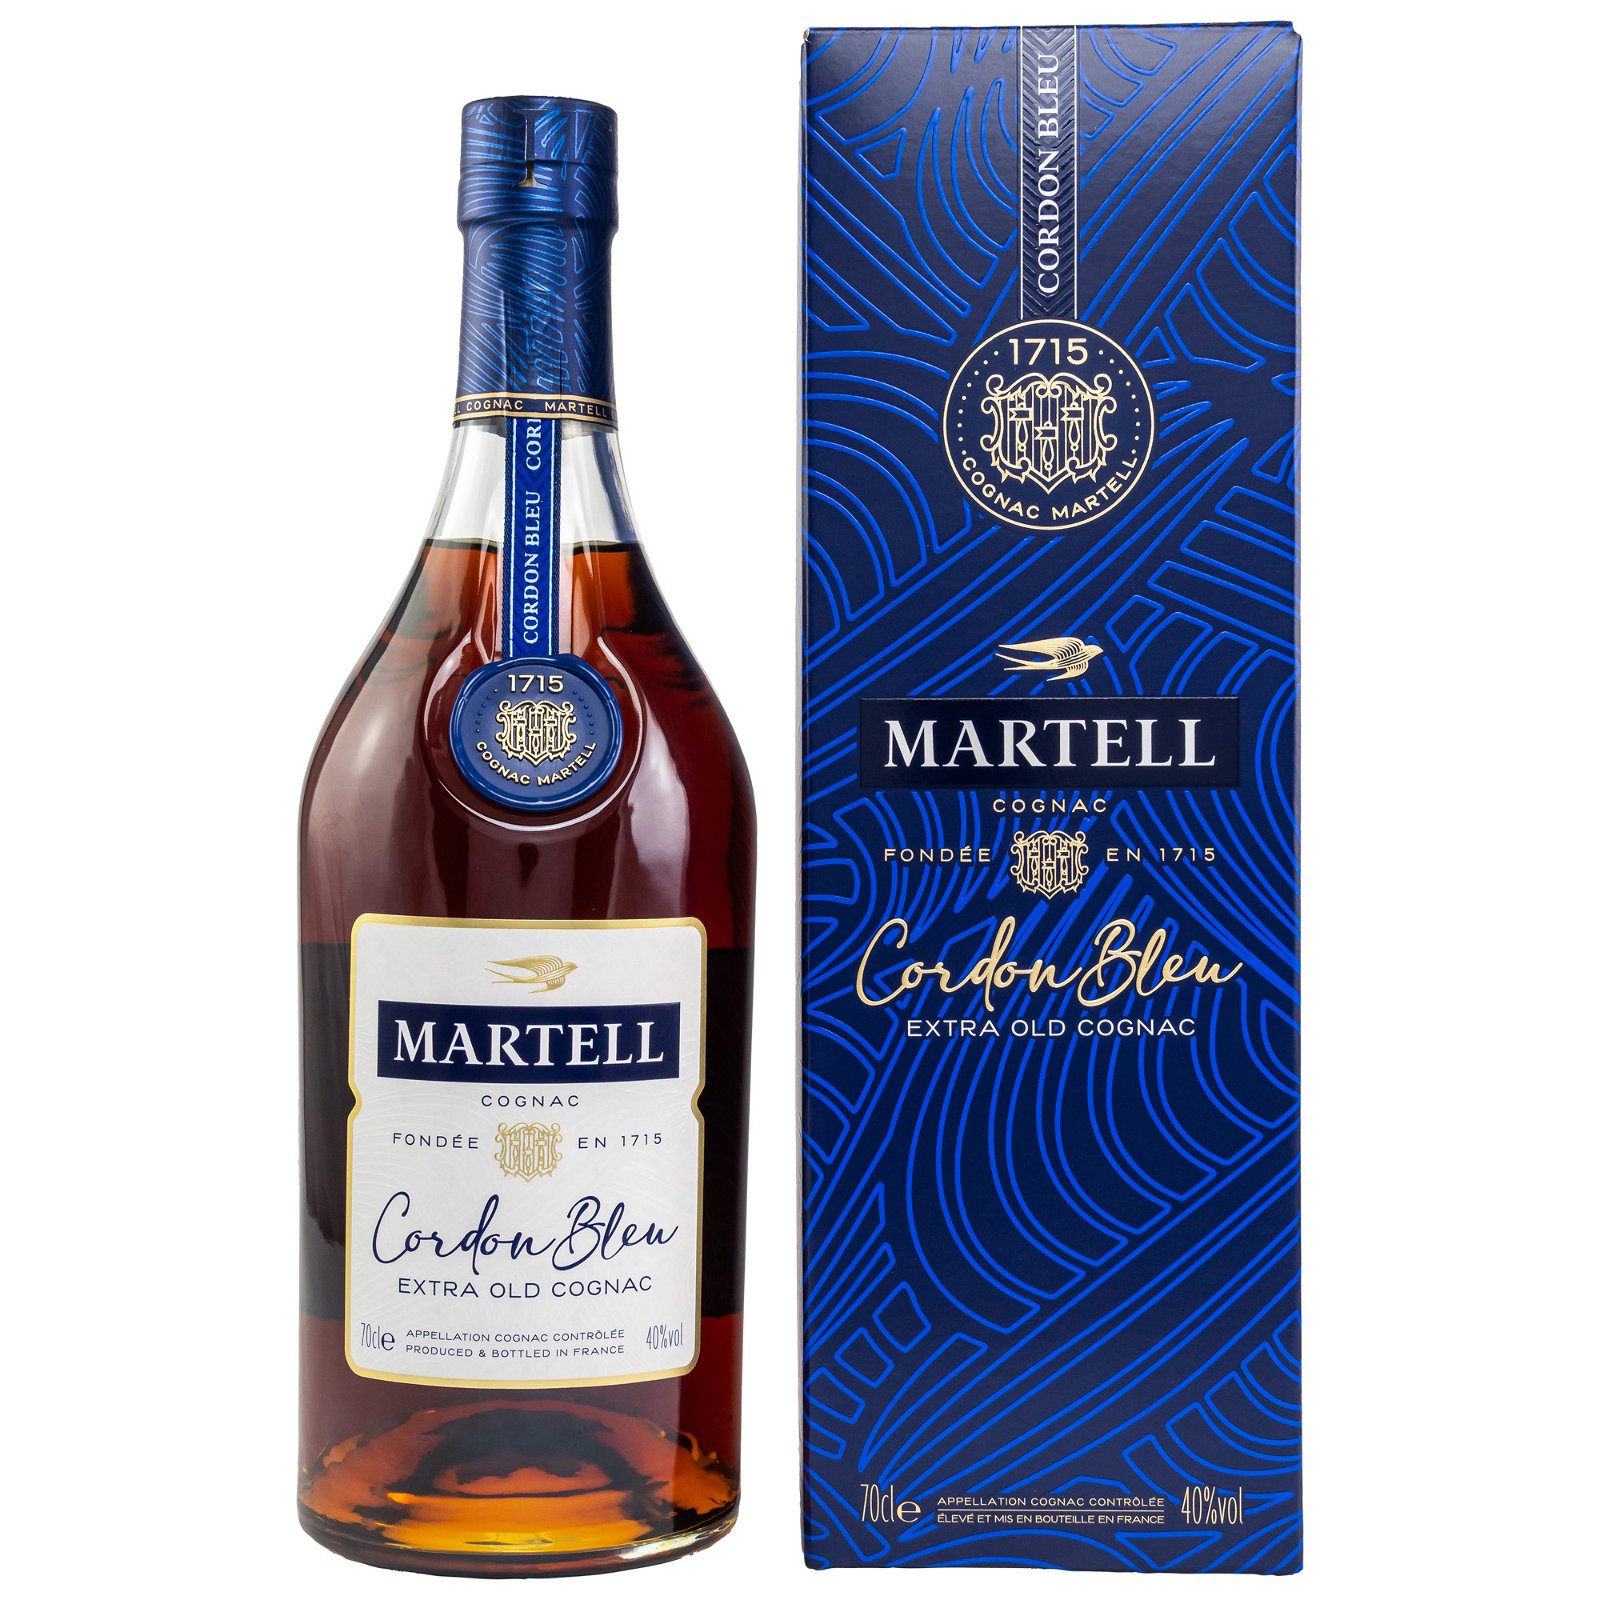 Martell Cordon Bleu Extra Old Cognac